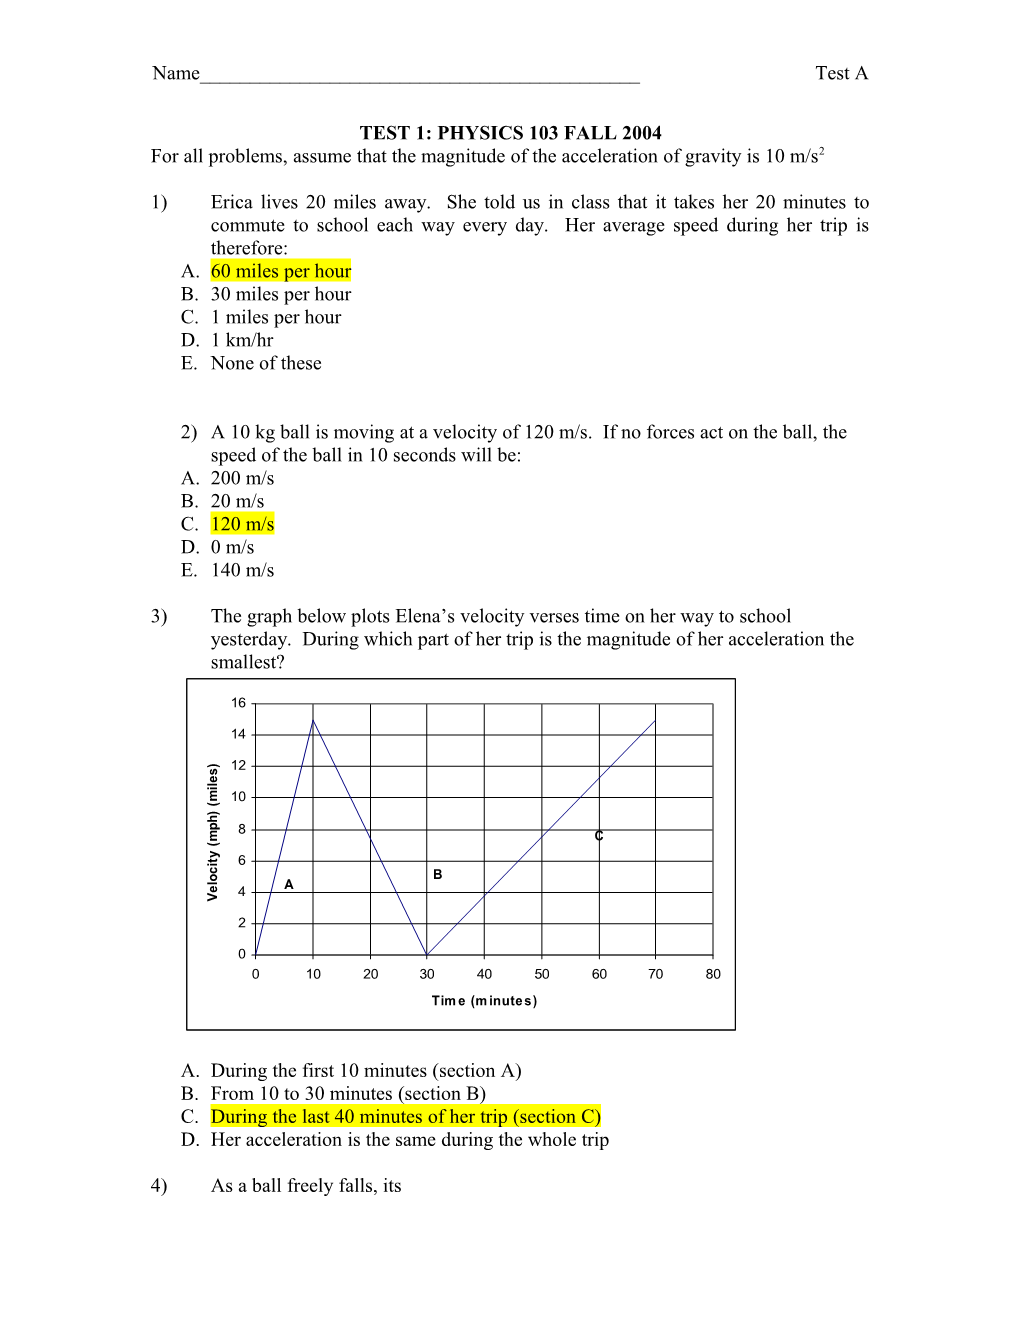 Sample Test 1: Physics 103